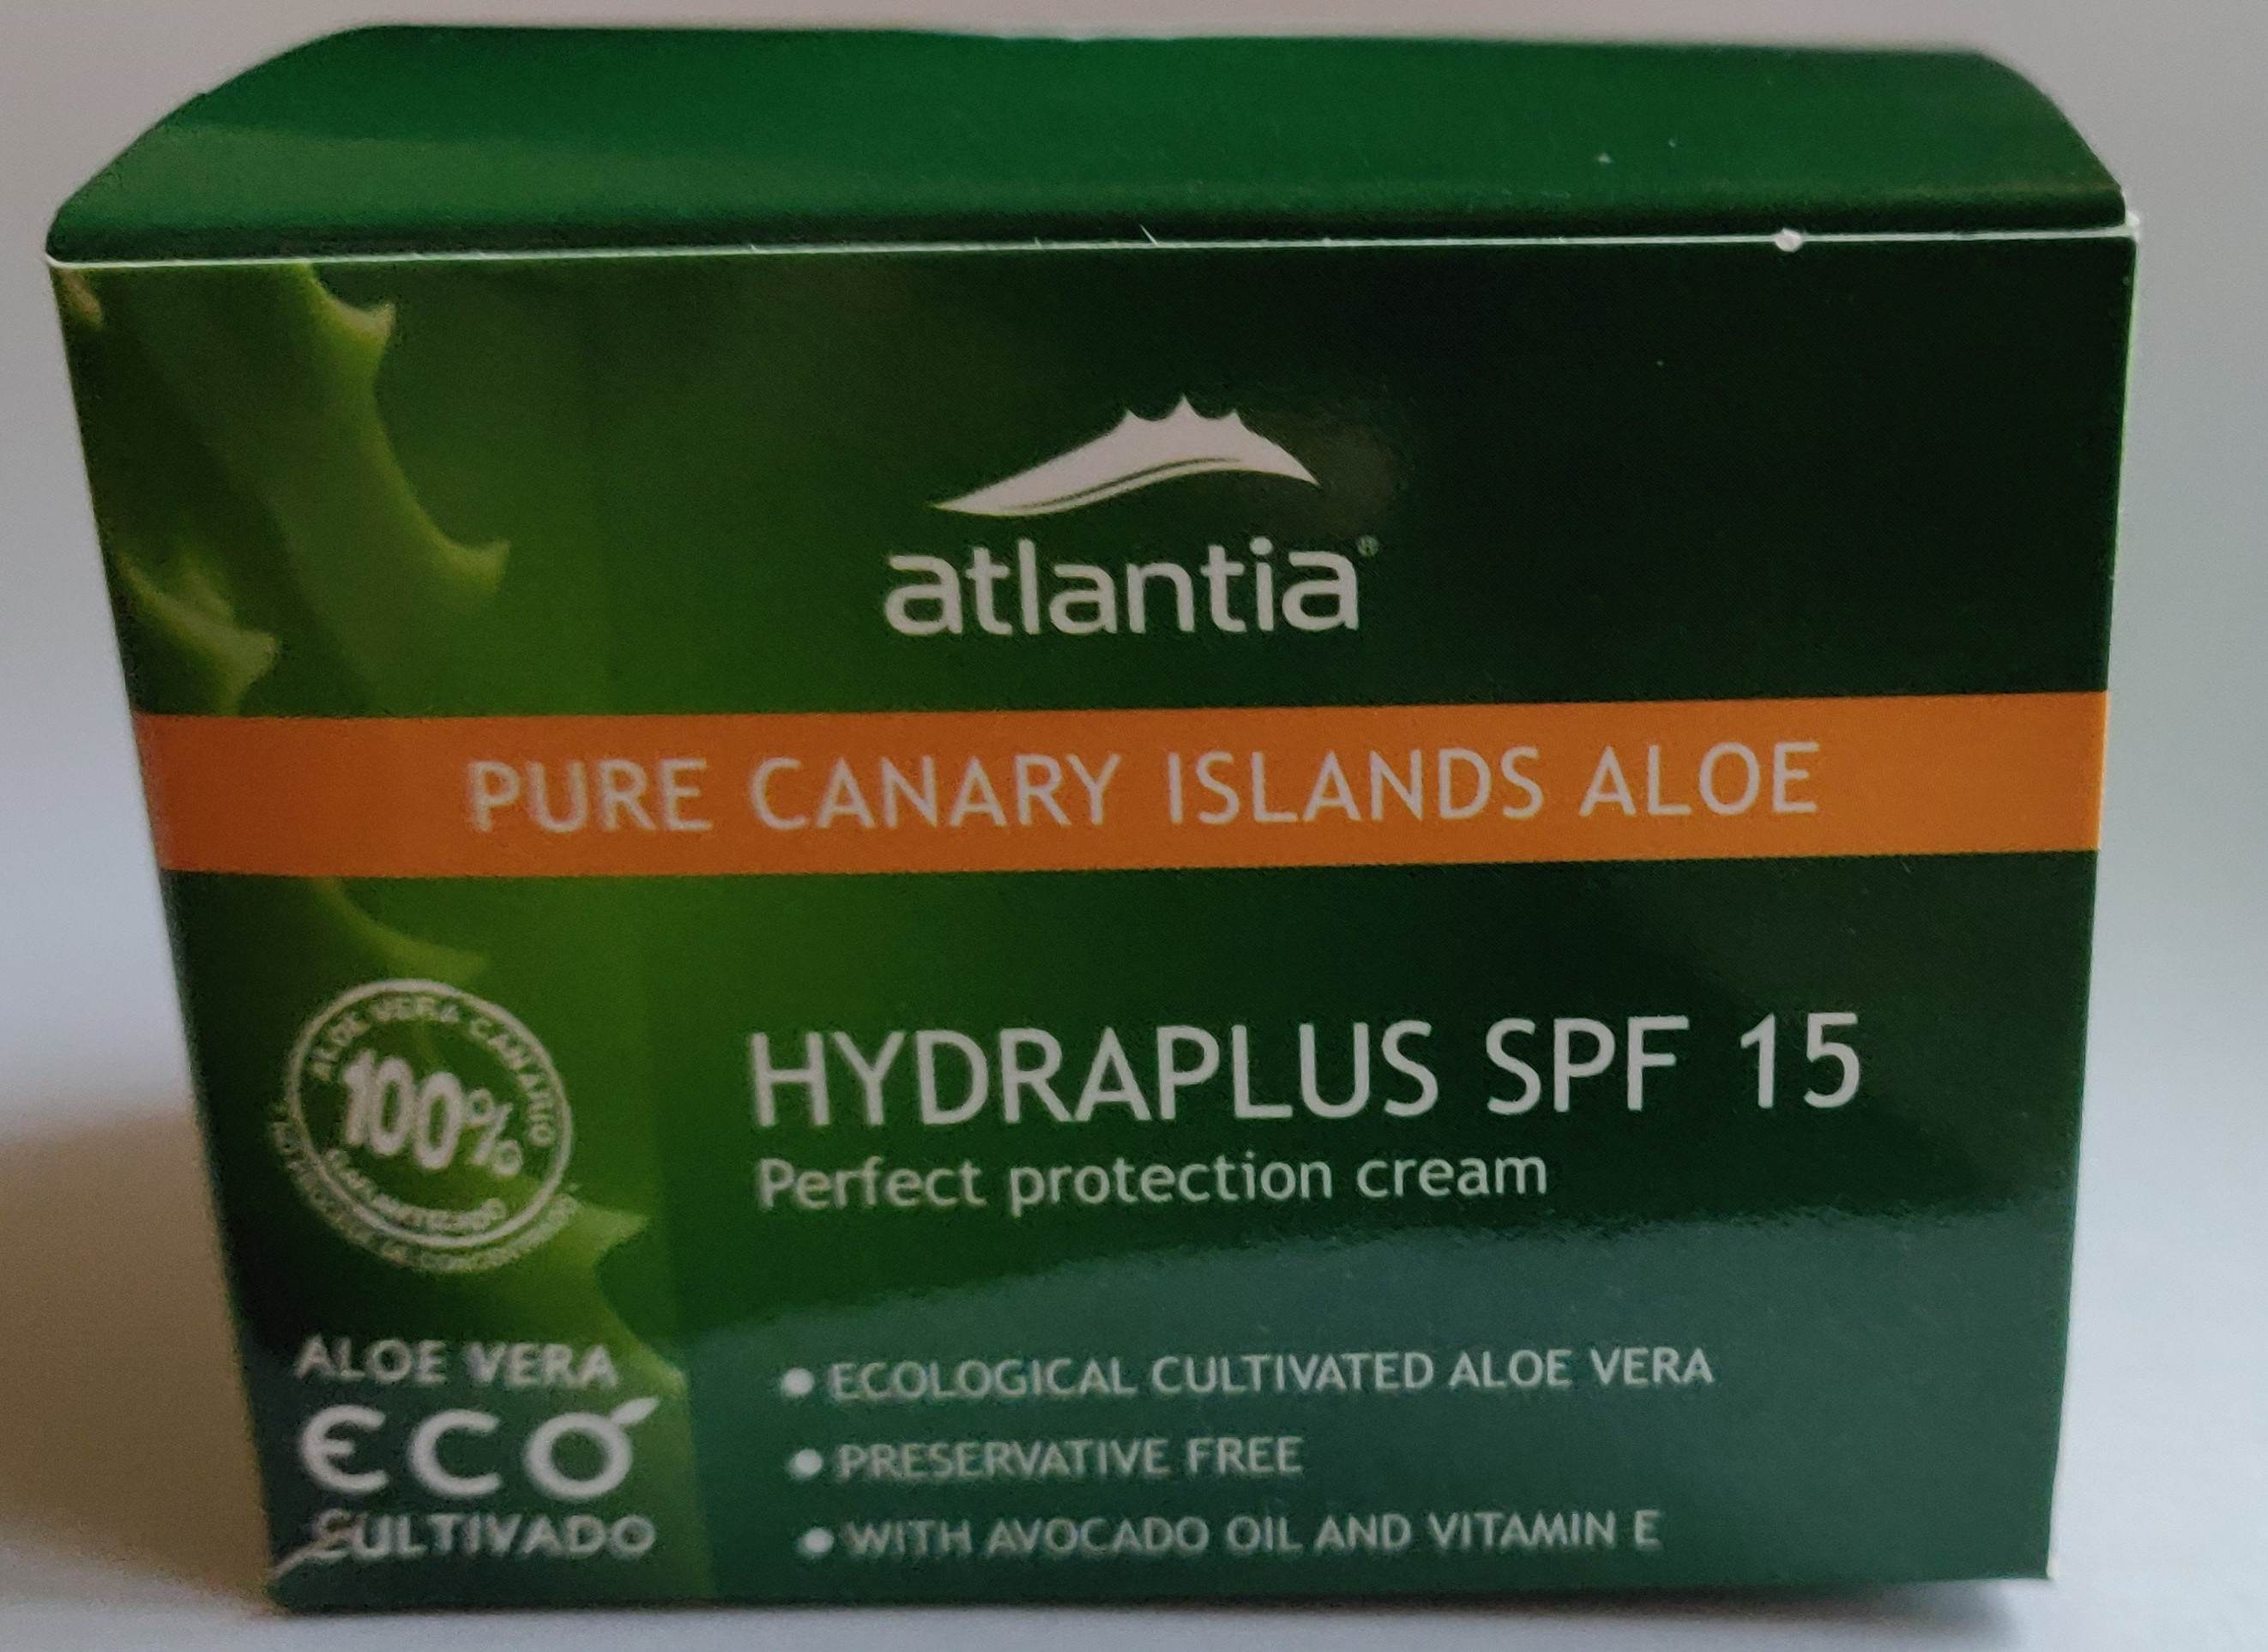 Atlantia Hydraplus Spf 15 Perfect Protection Cream